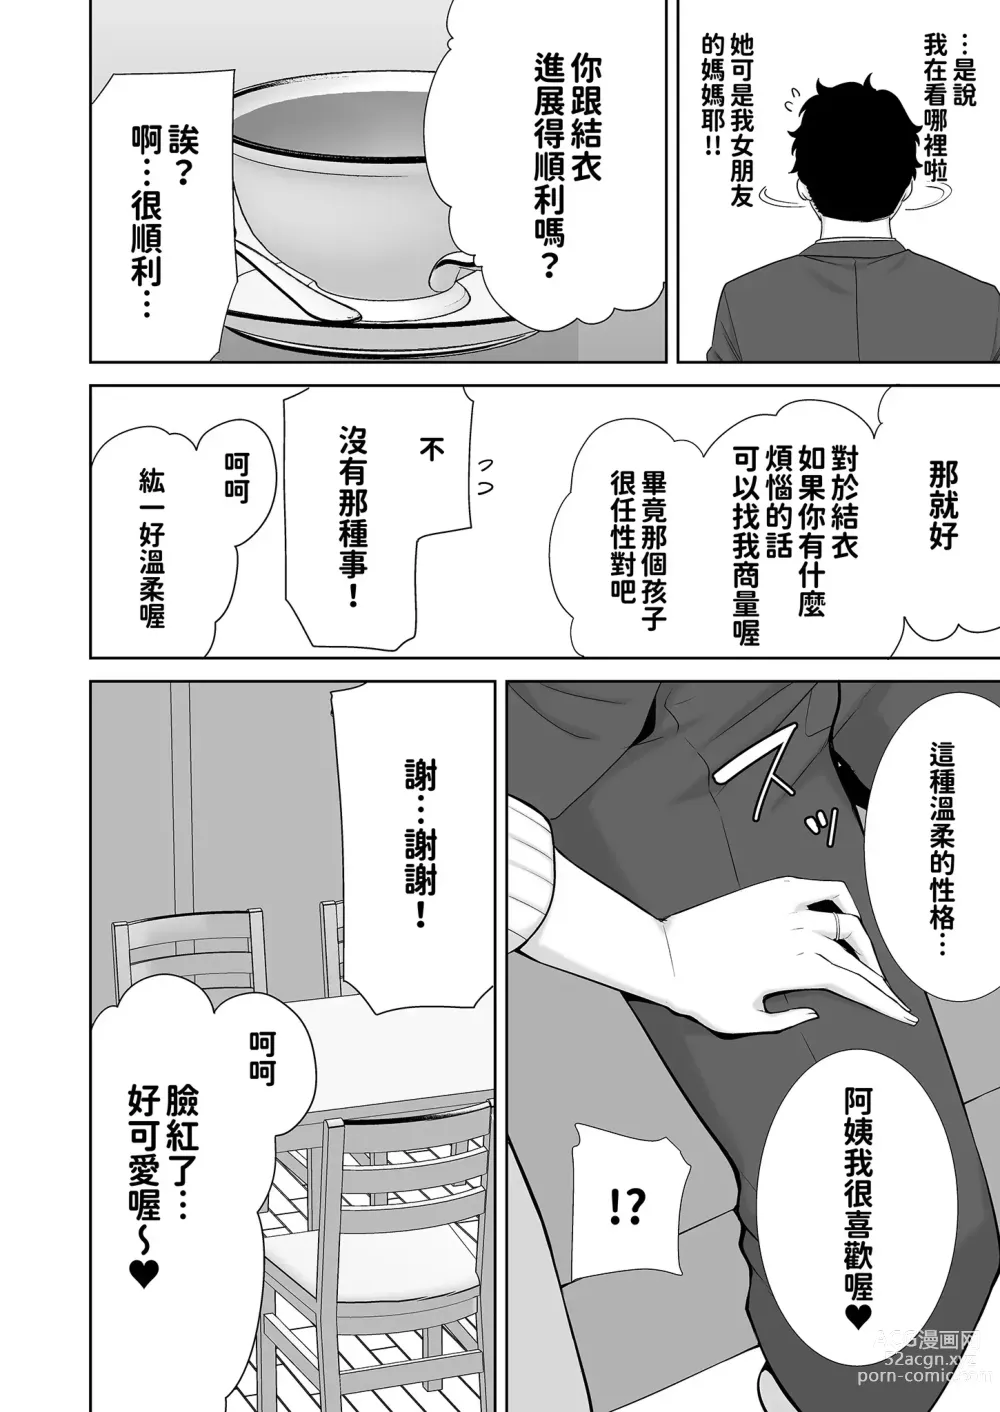 Page 13 of doujinshi sdgsd